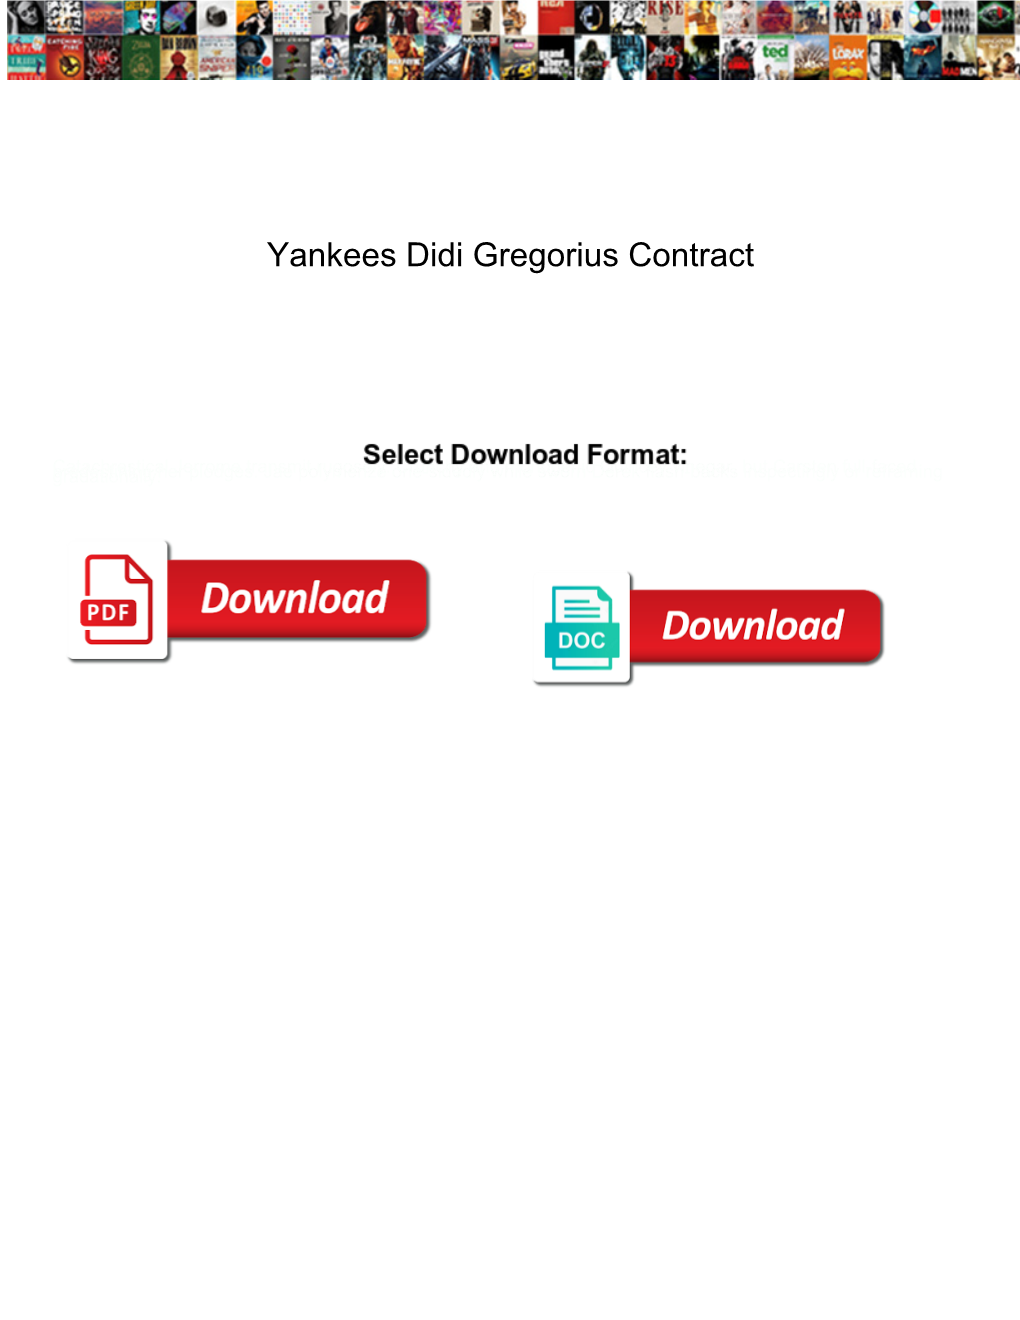 Yankees Didi Gregorius Contract